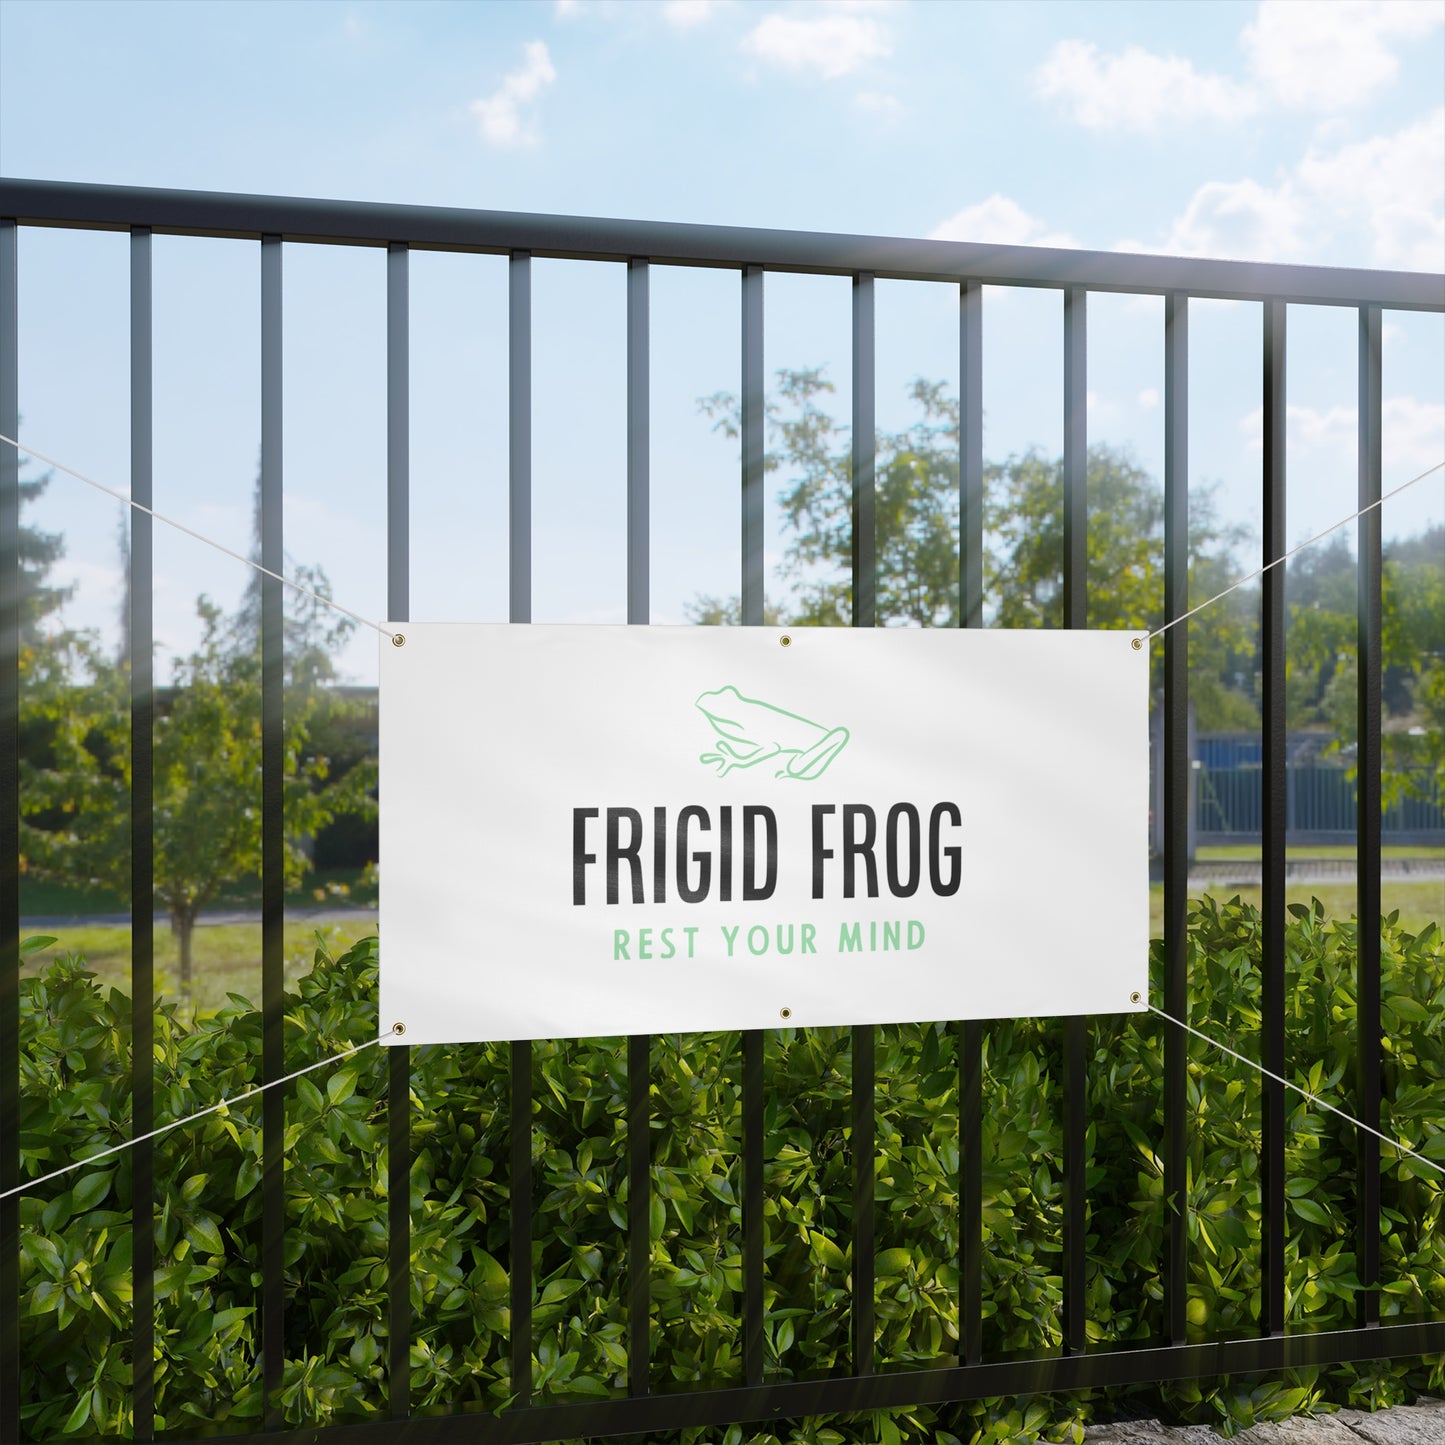 Frigid Frog Banner